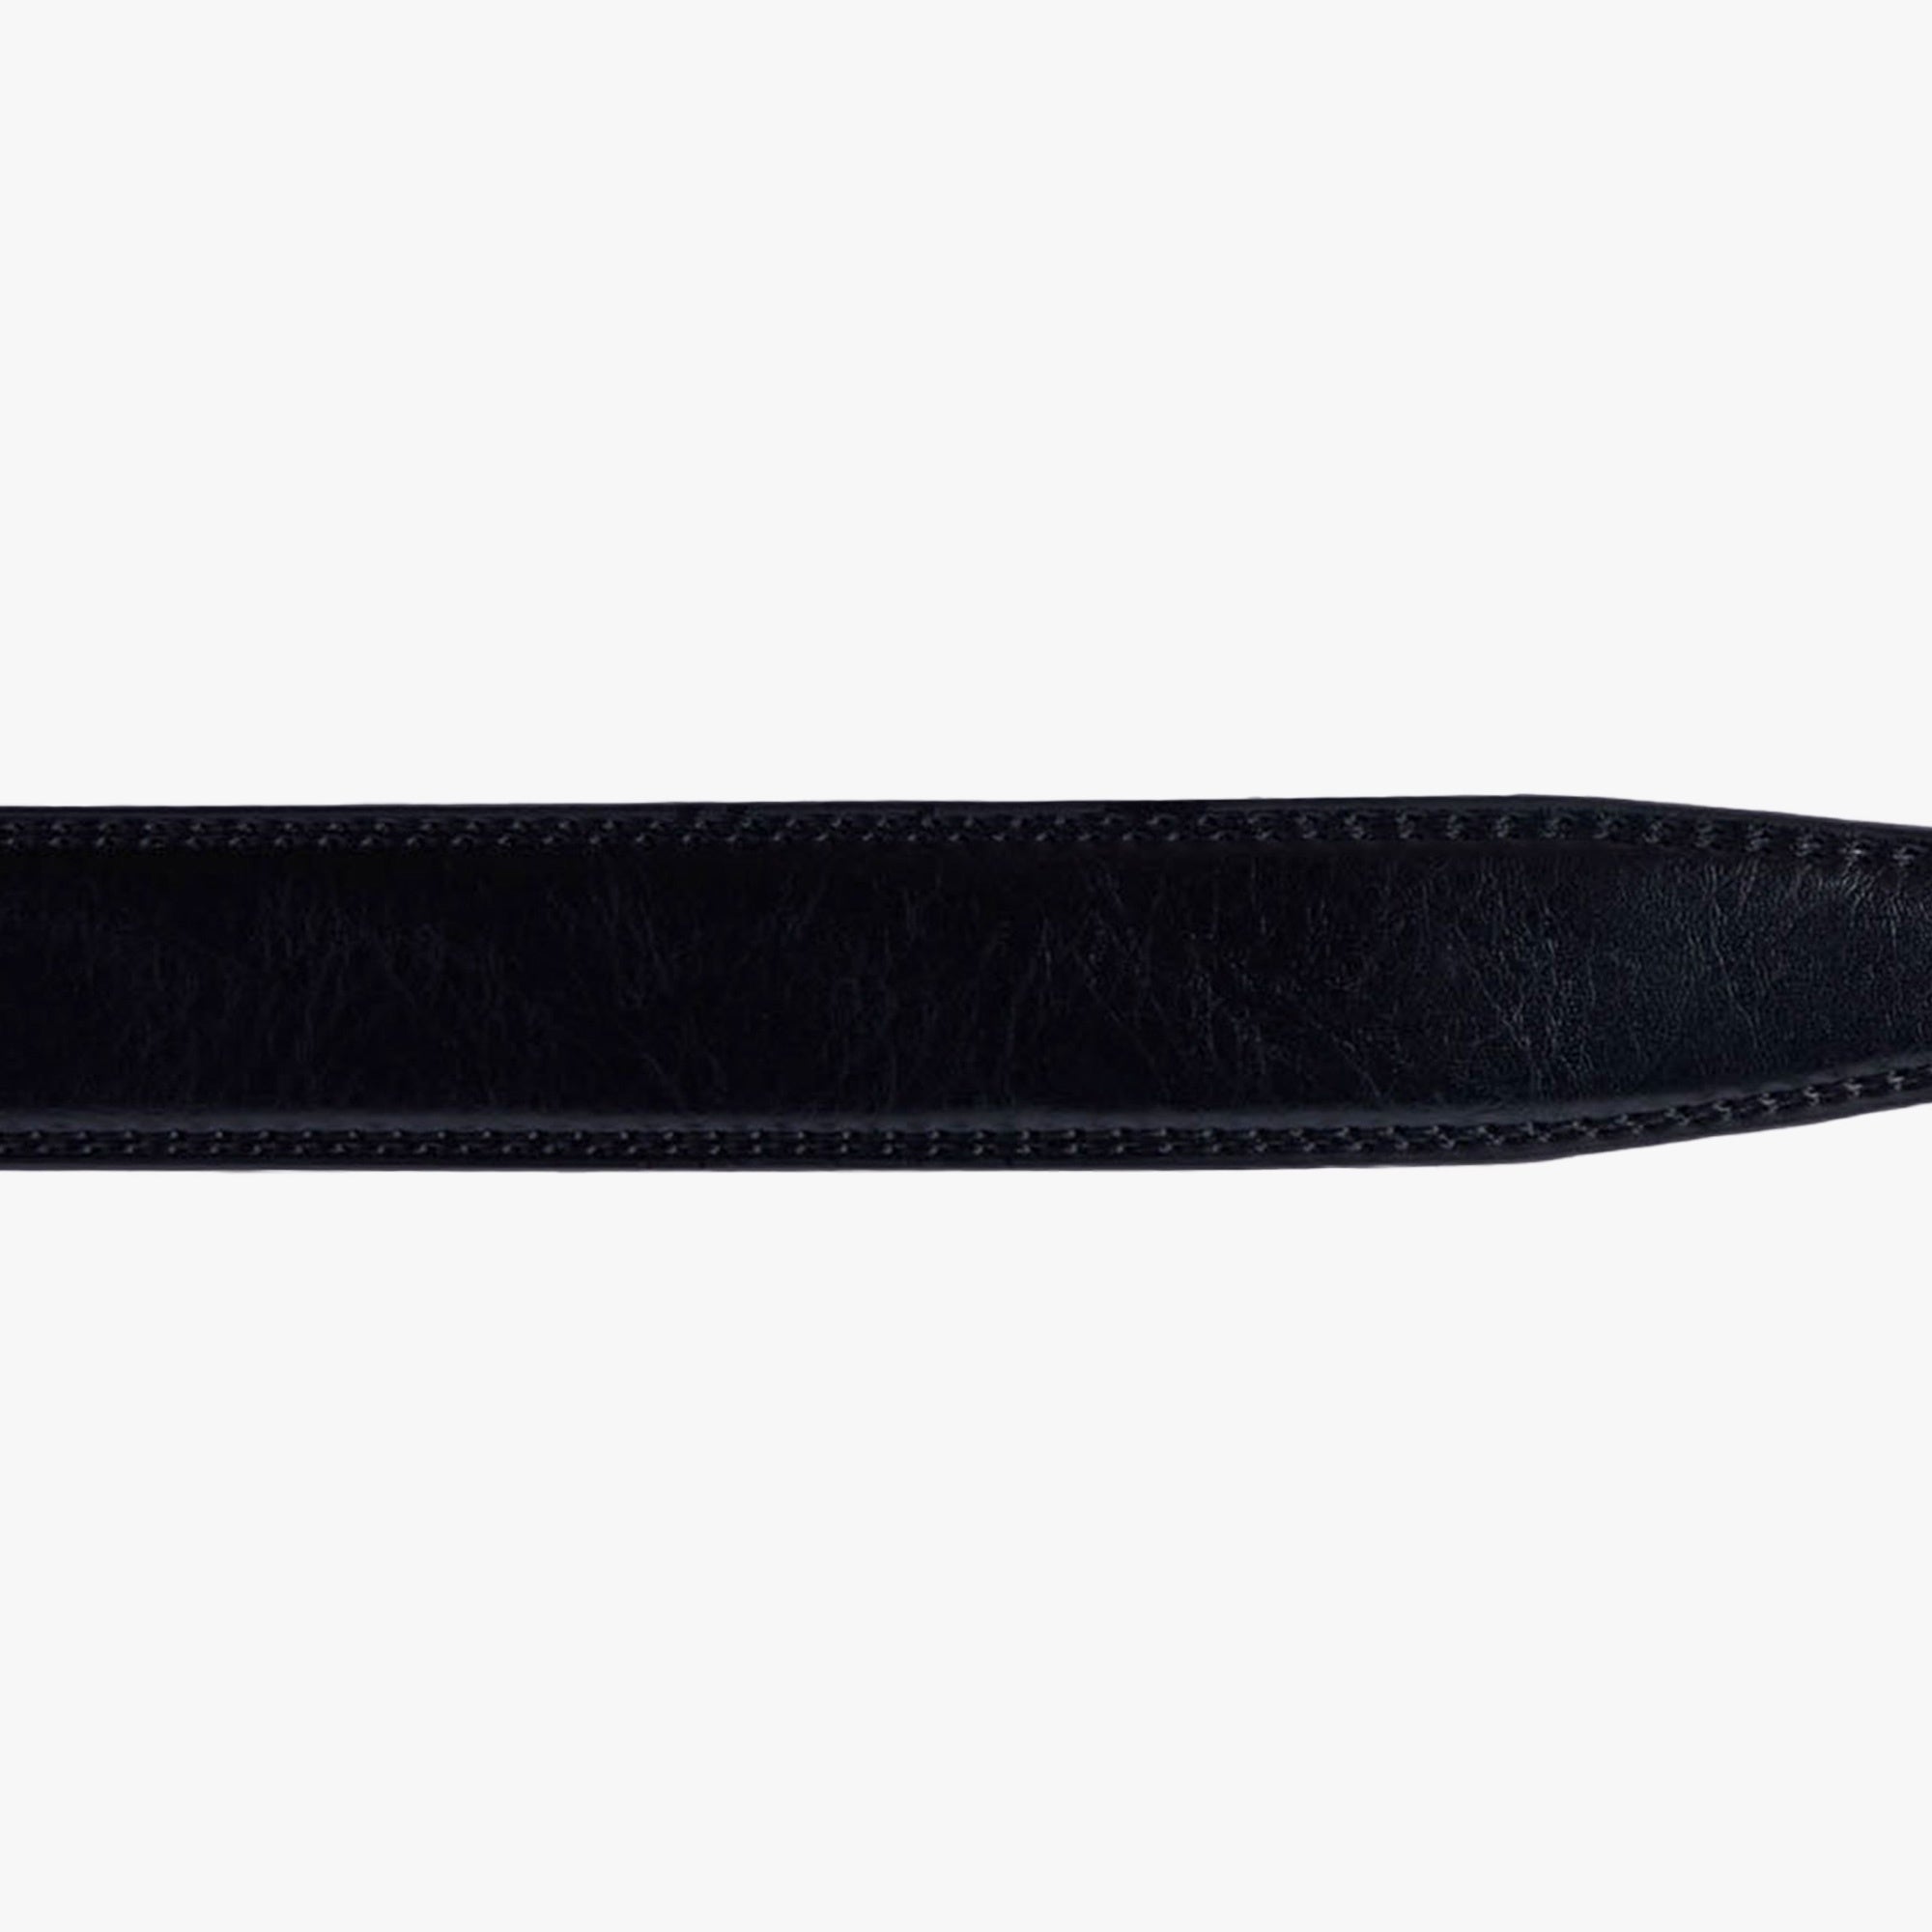 Adesso Black Leather Belt